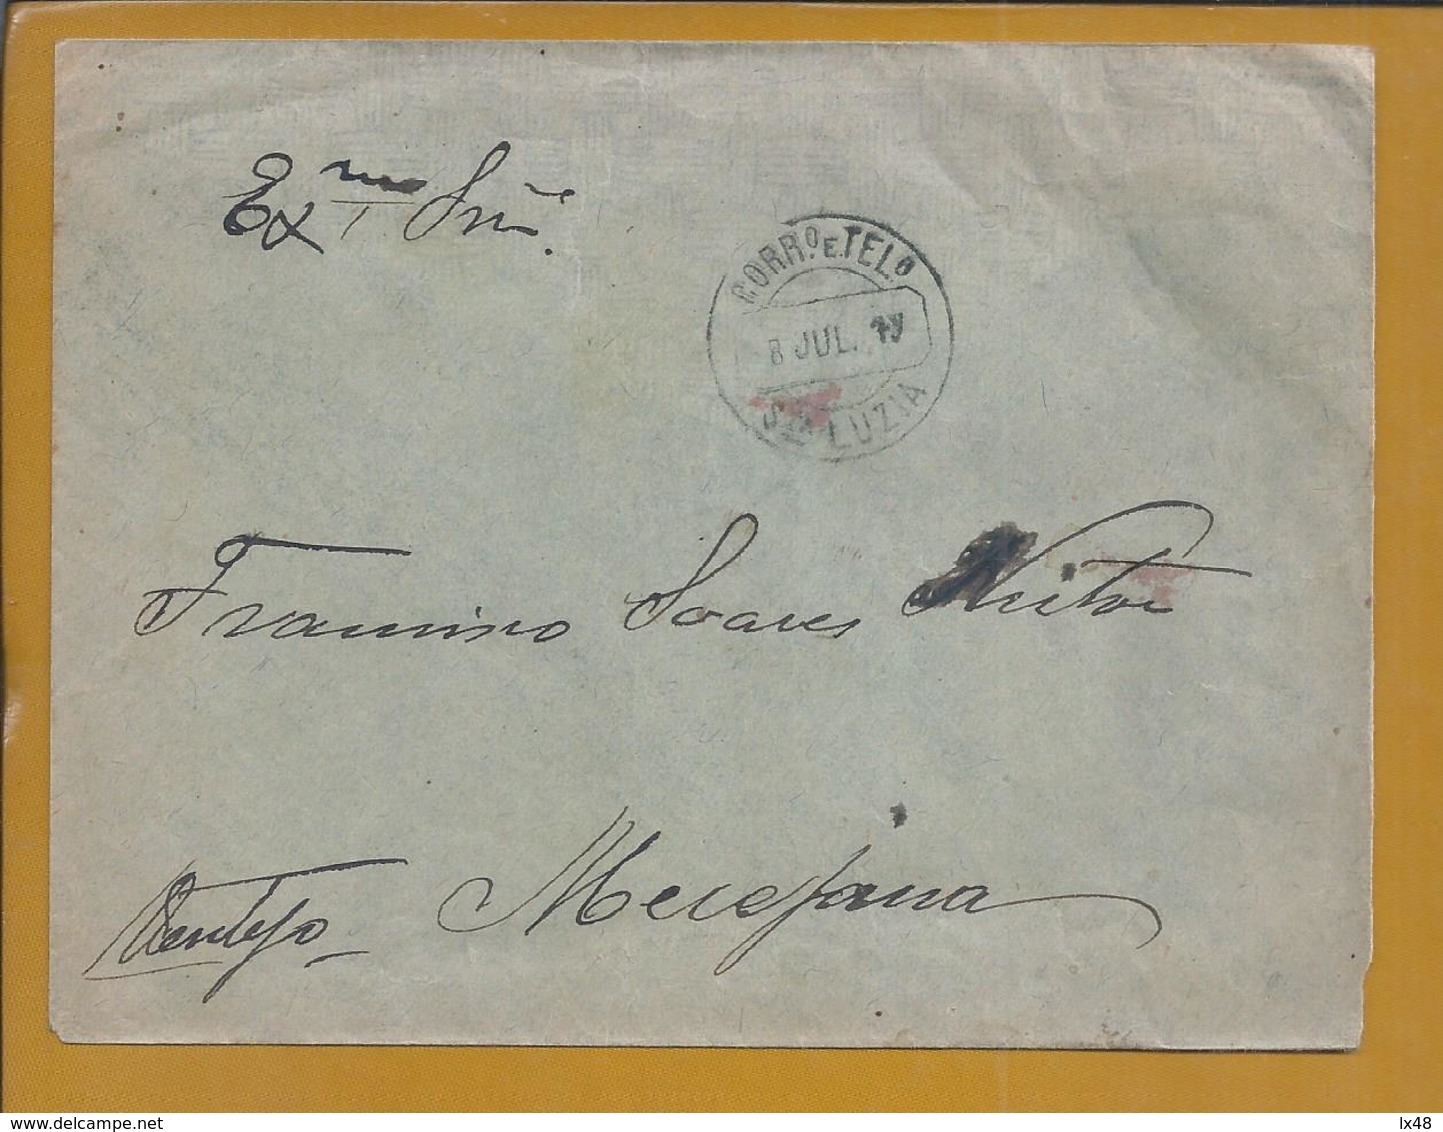 Carta De Santa Luzia, Tavira, Algarve, 1917. Stamp Ceres 2 1/2c. Messjana. Letter From Santa Luzia, Tavira, Algarve. 2sc - Storia Postale